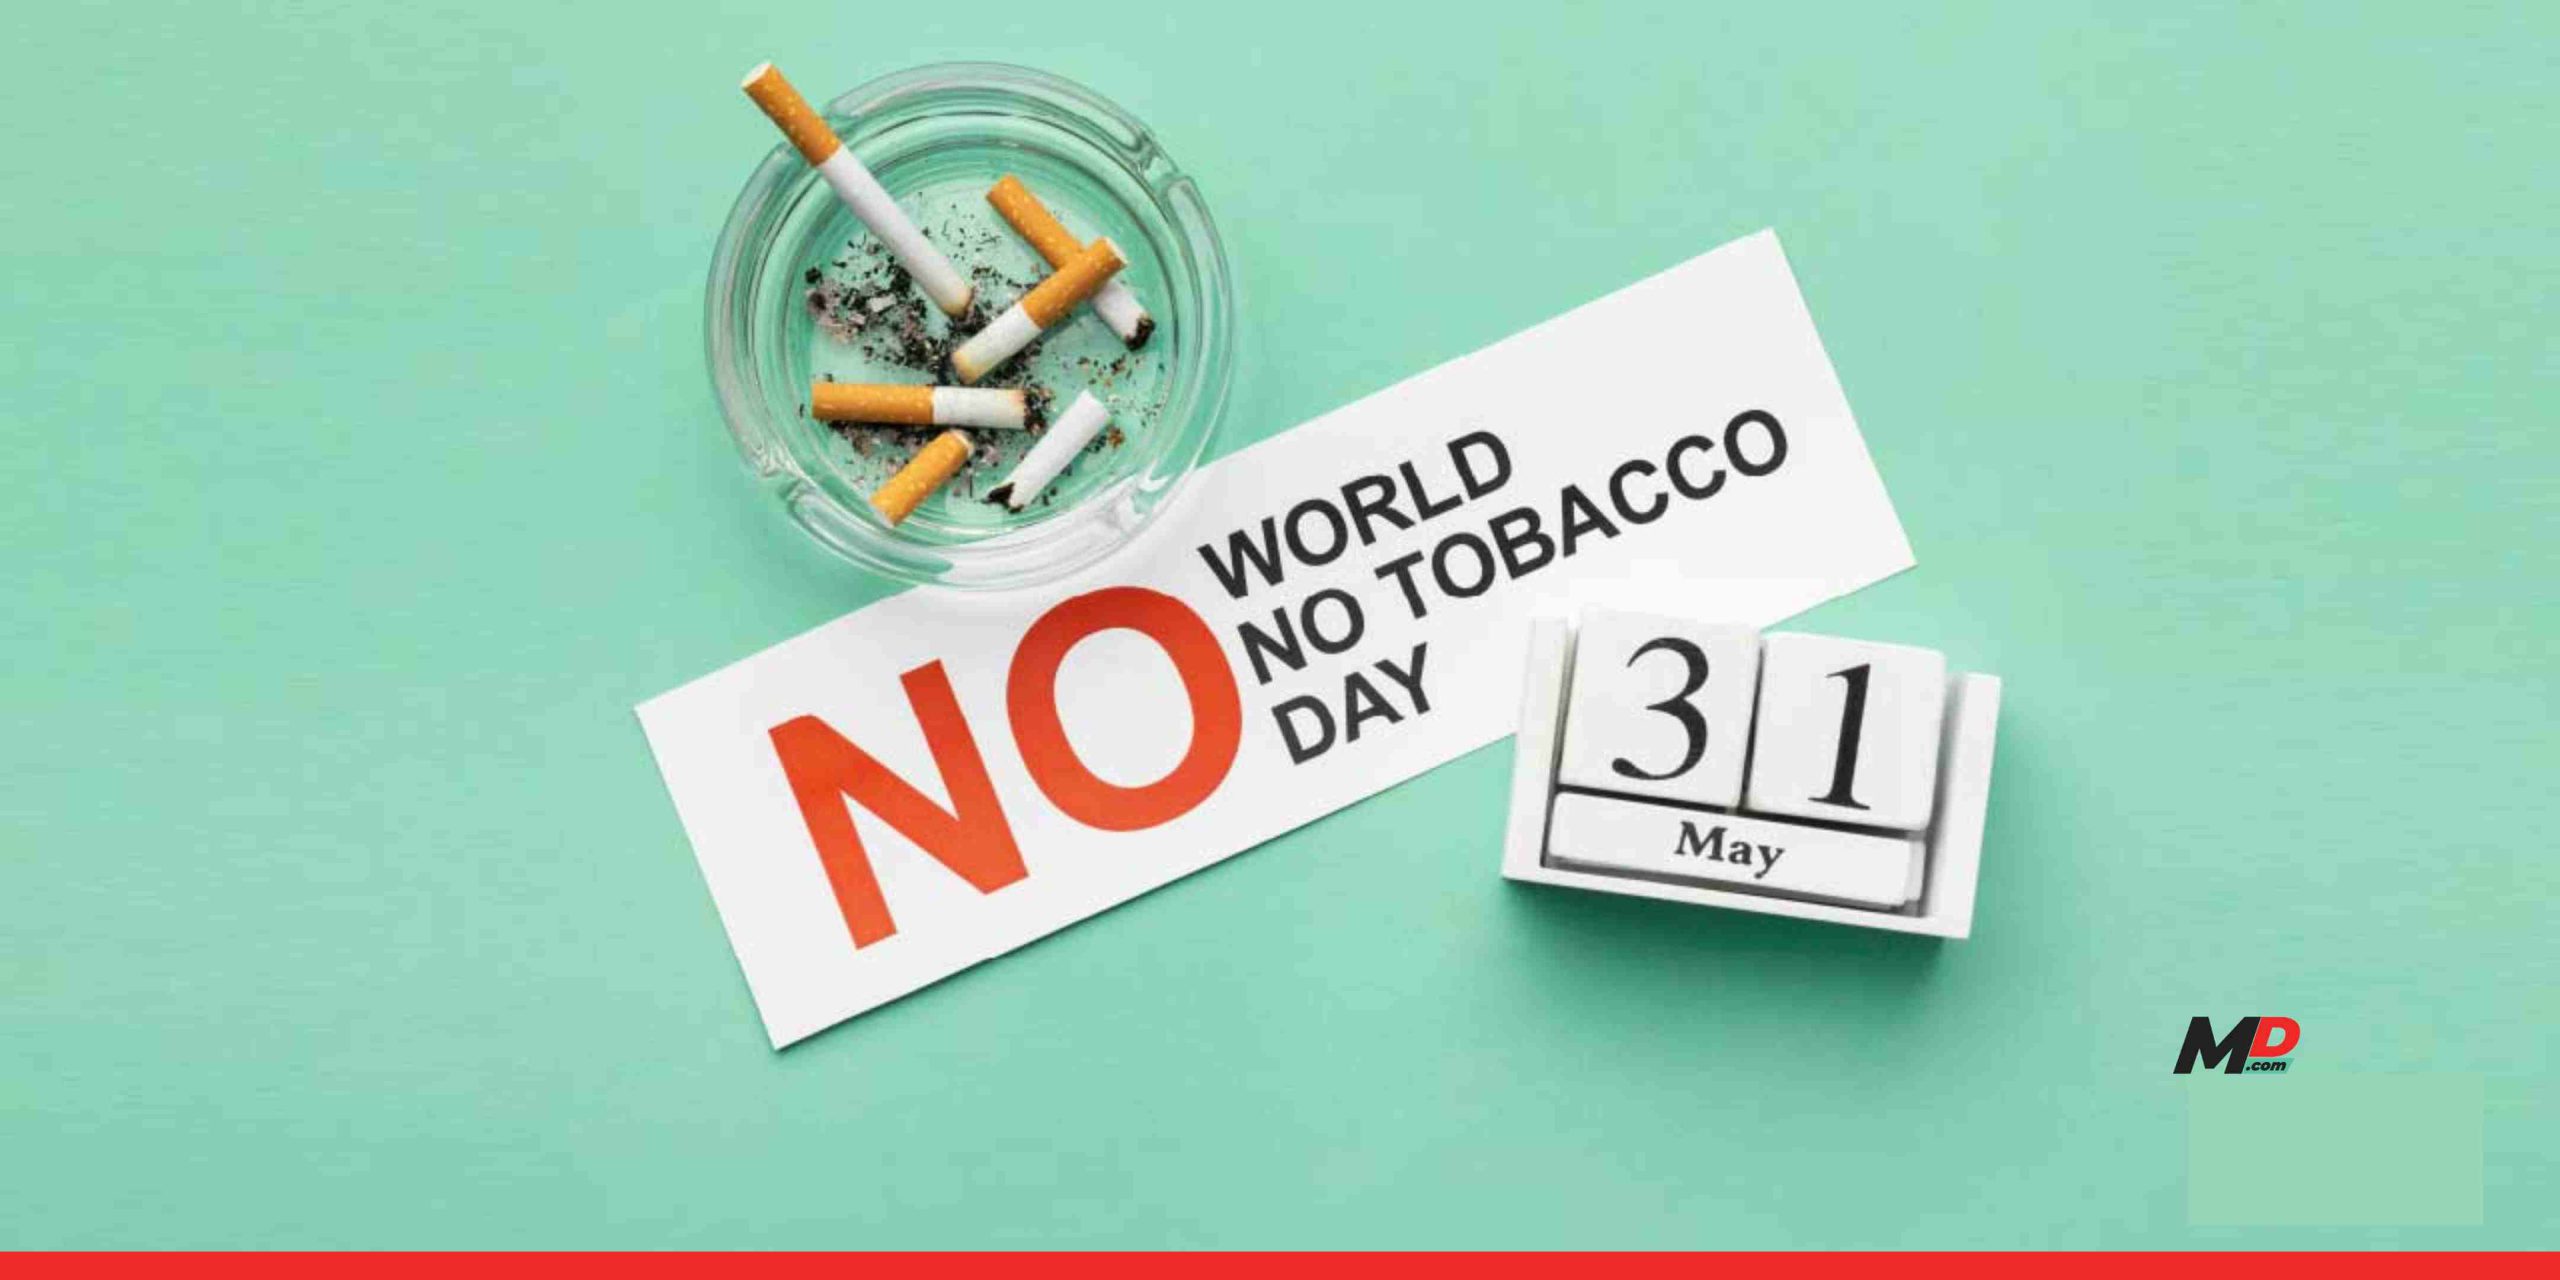 World No-Tobacco Day